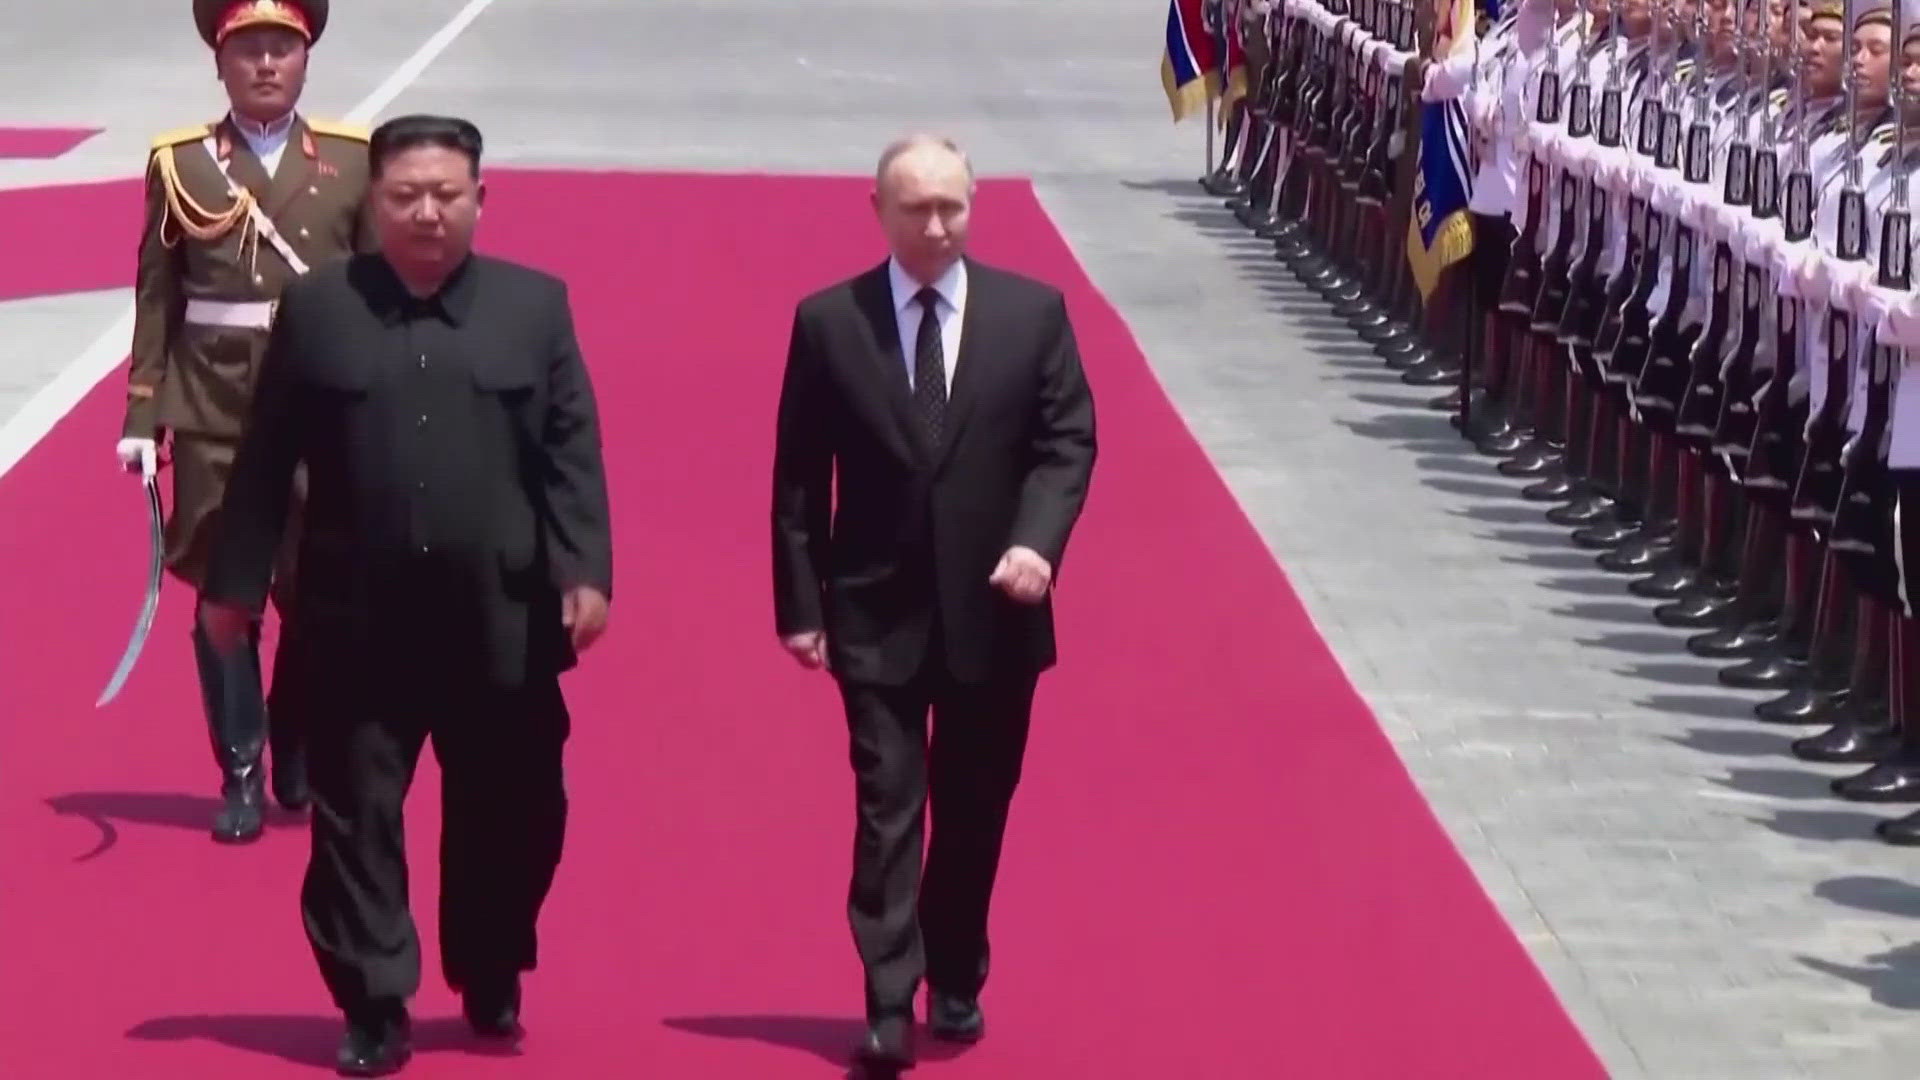 Russian President Vladimir Putin met with North Korean leader Kim Jong Un today in North Korea's capitol.